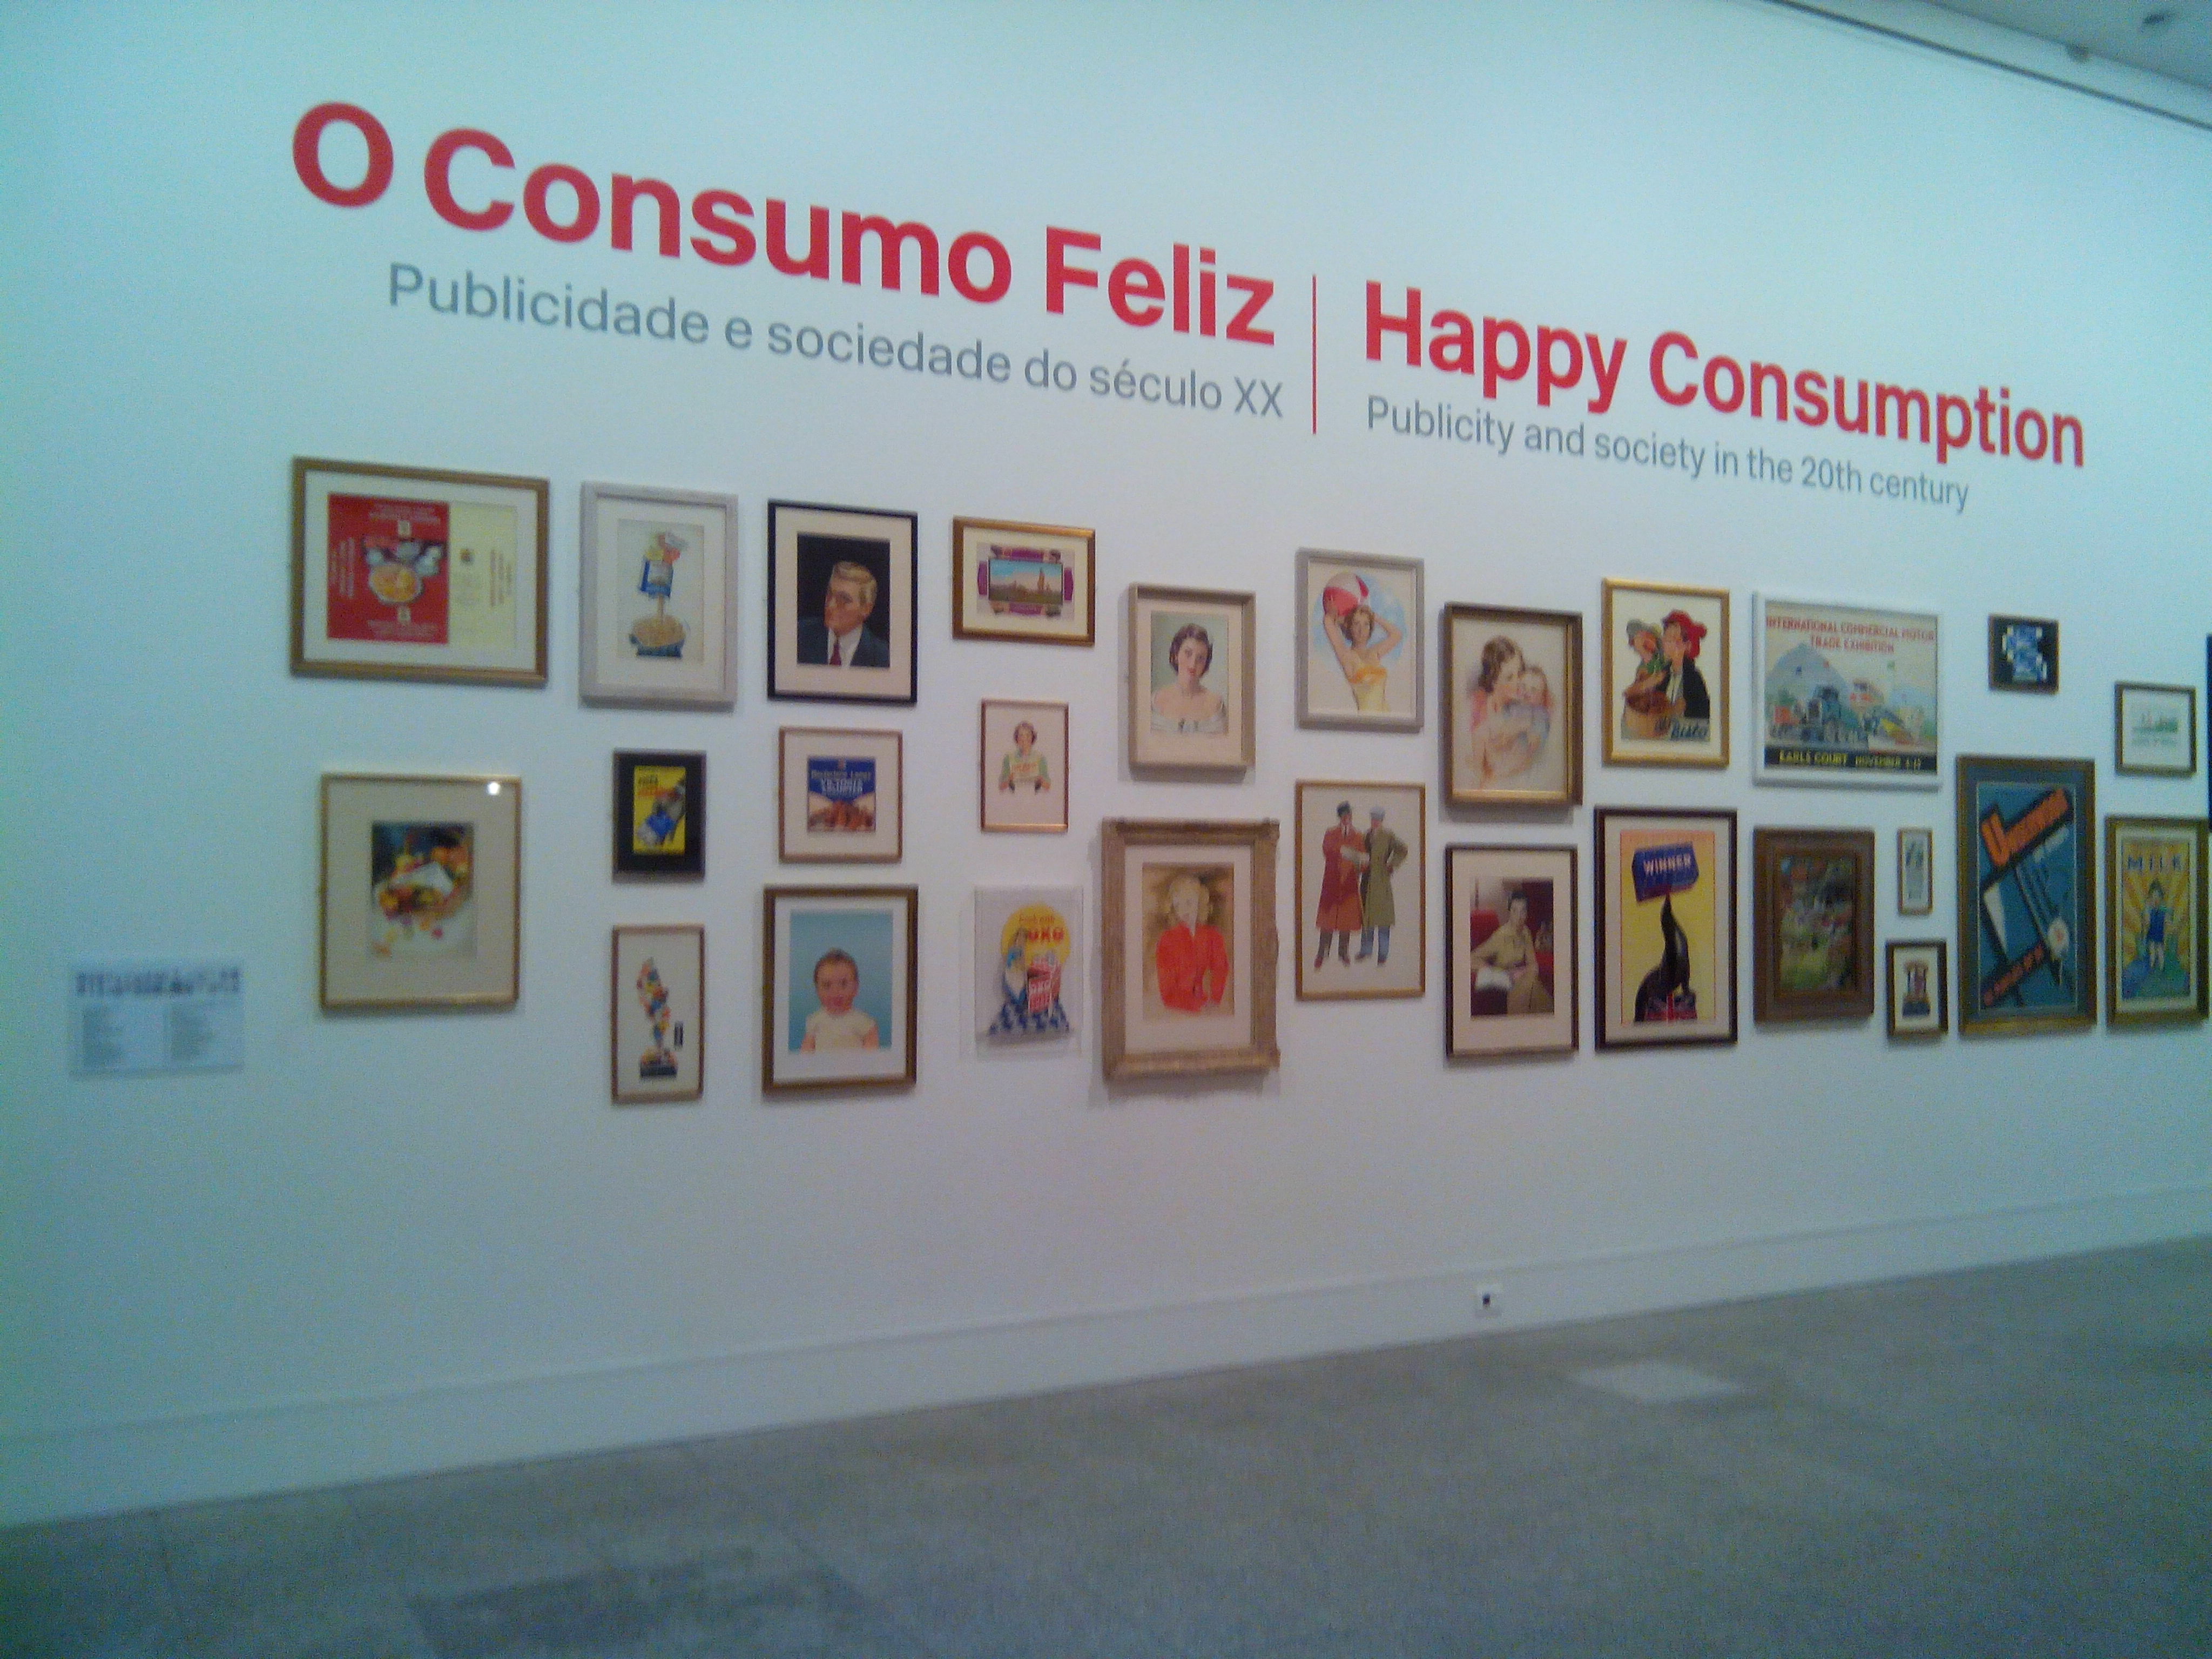 Berardo expo on art in advertising in the past century